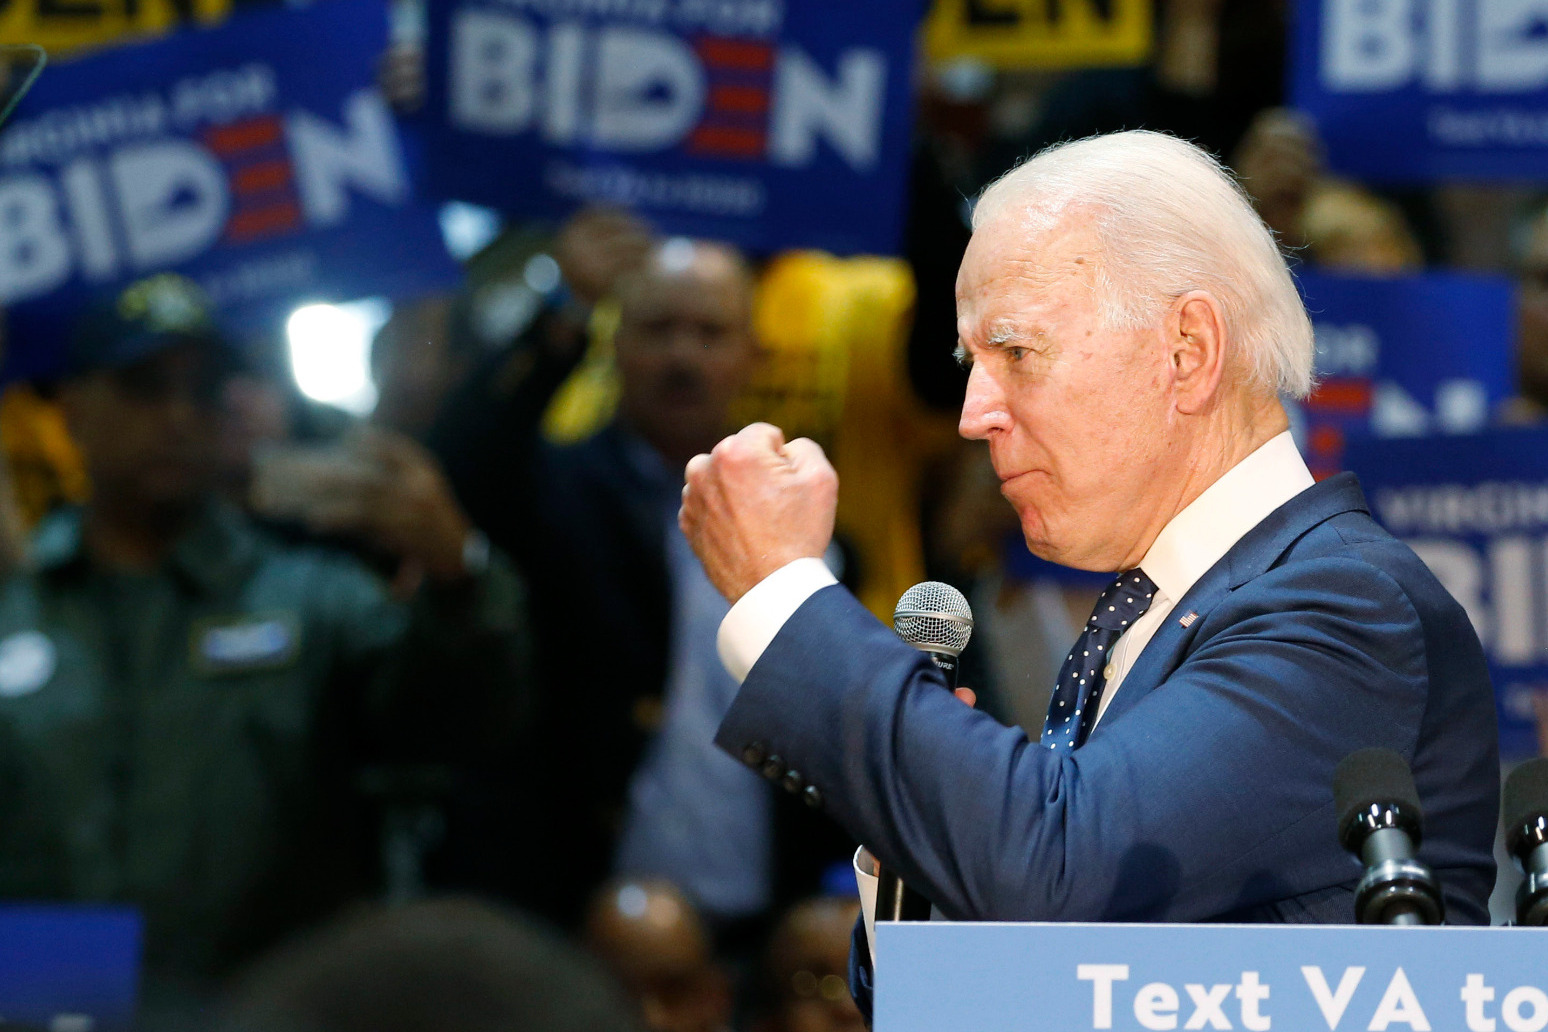 Joe Biden wins backing of former Democrat potential candidates 